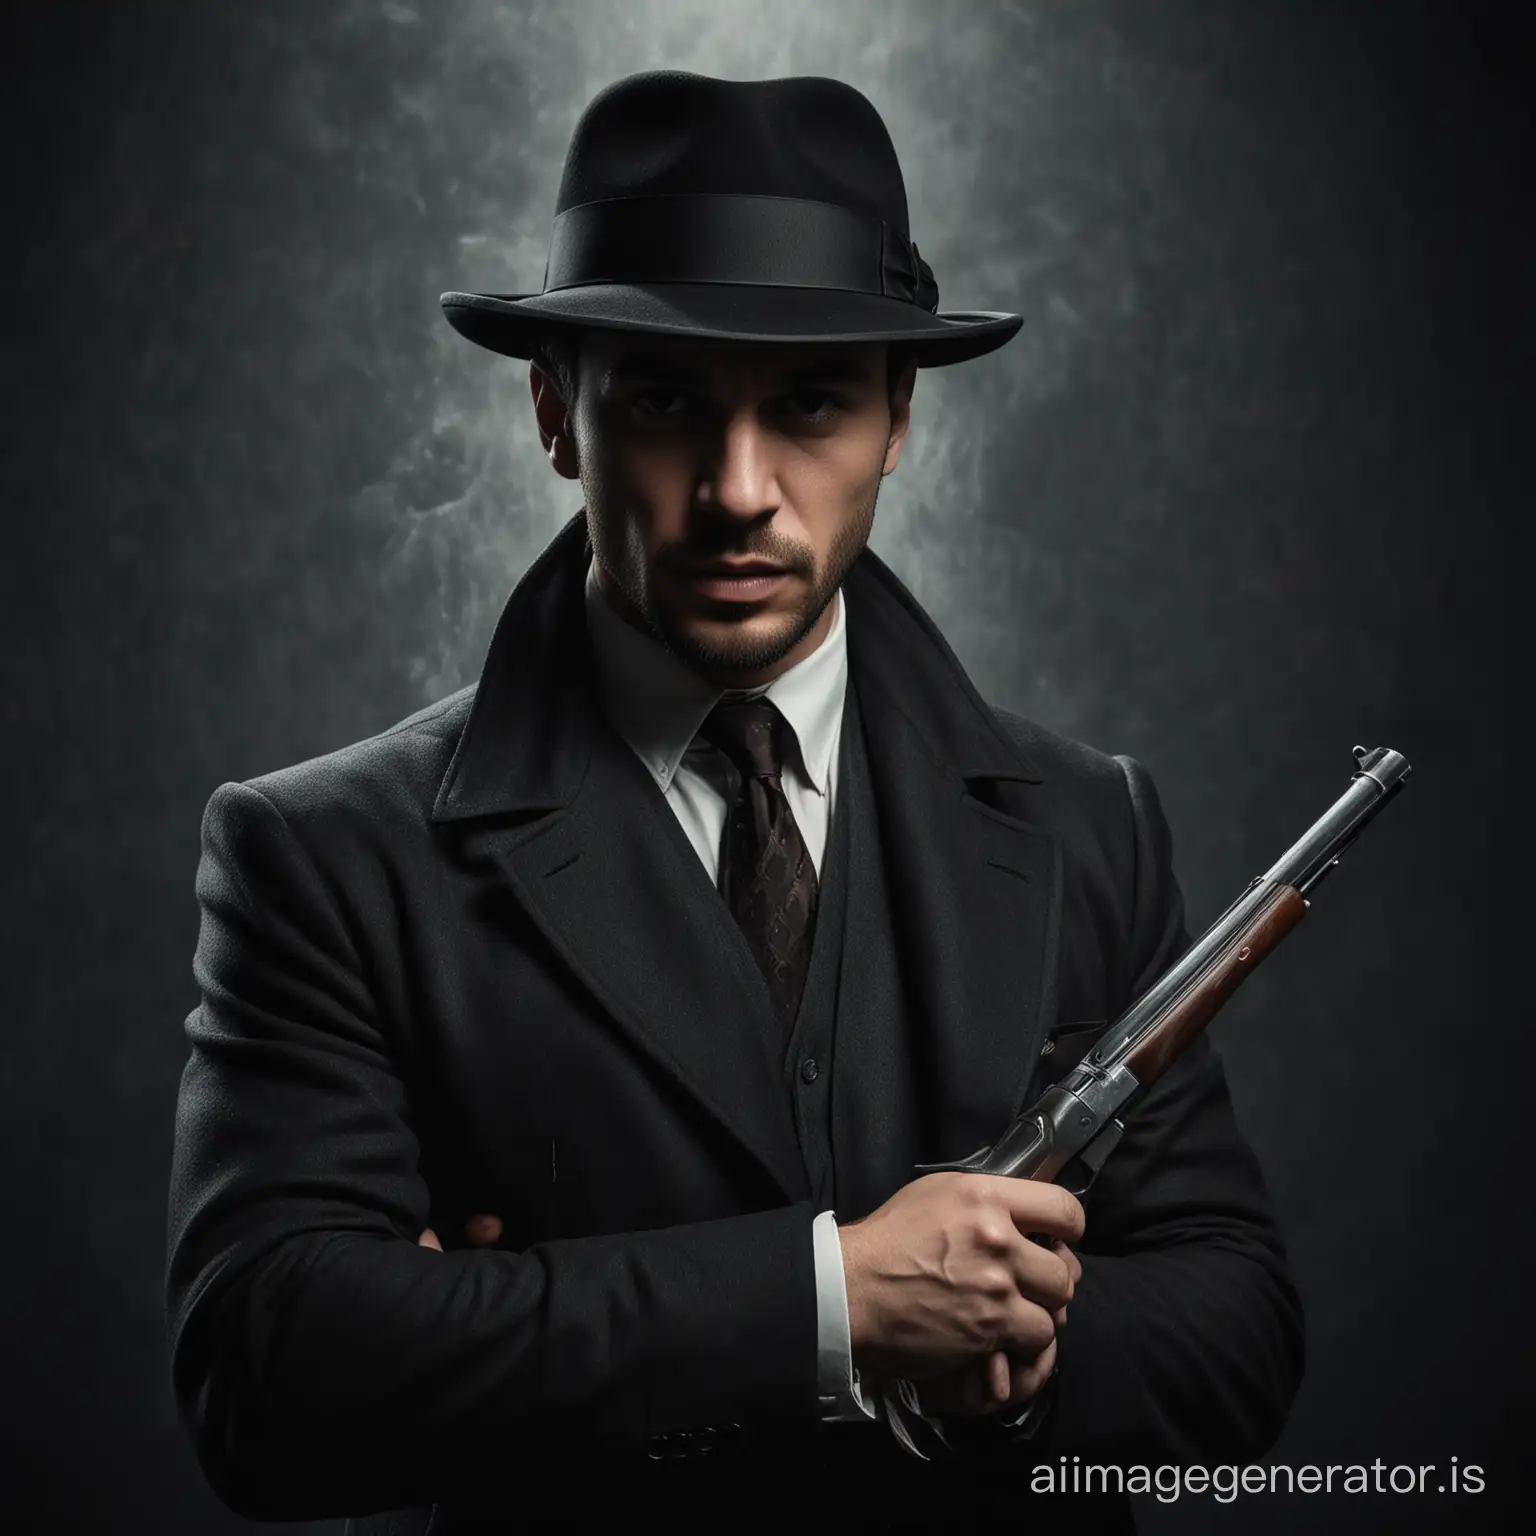 1930s-Mafia-Hitman-in-Hat-with-Weapon-on-Dark-Urban-Backdrop